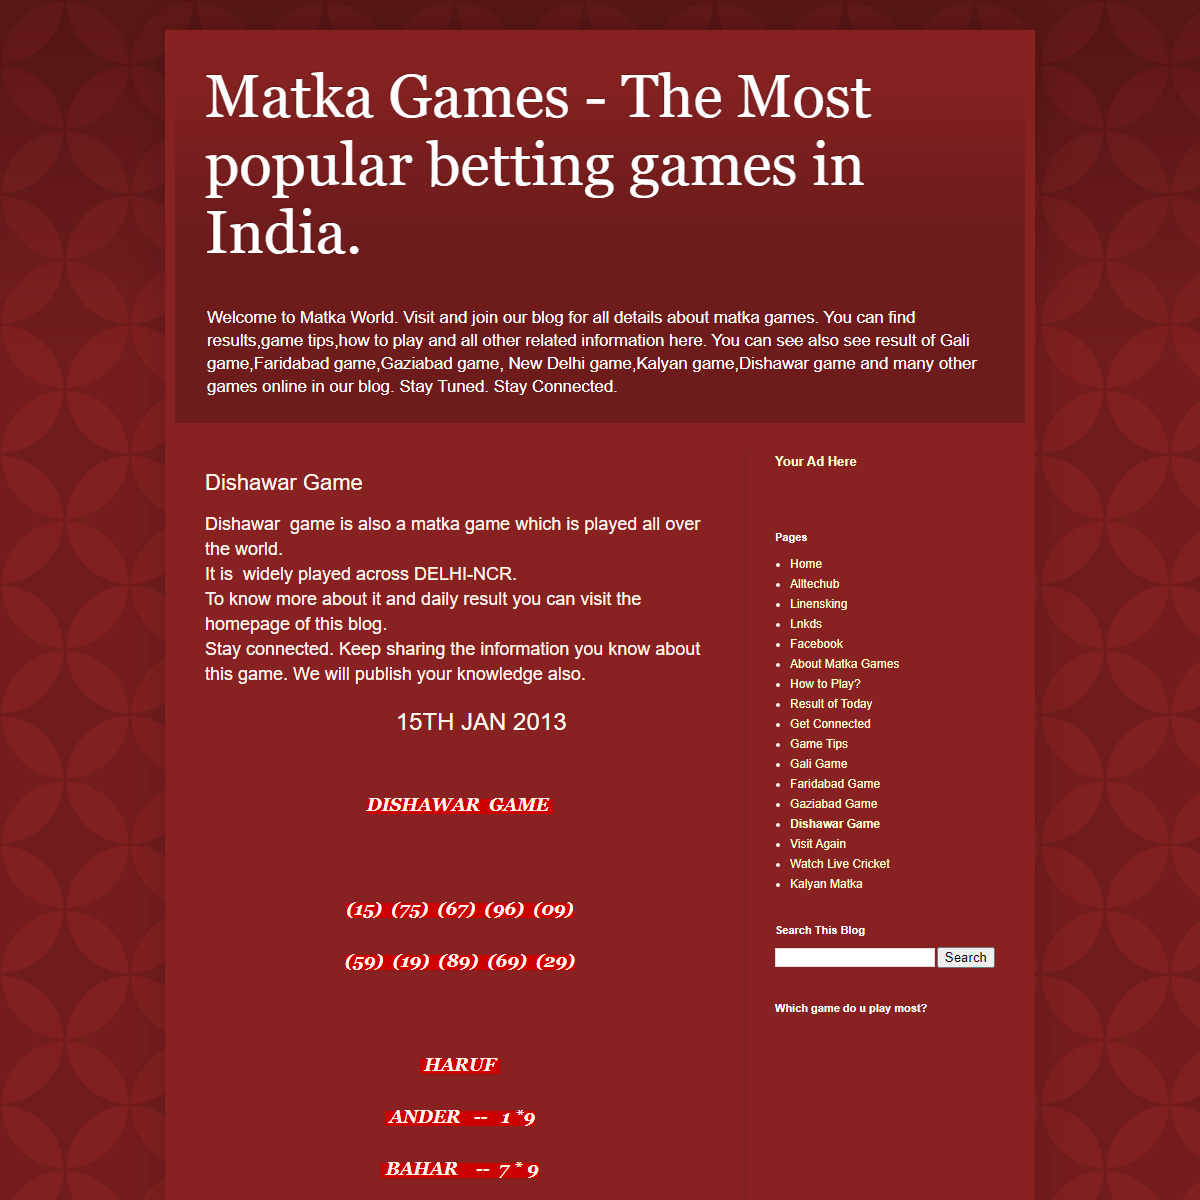 A complete backup of https://matkagames.blogspot.com/p/dishawar-game.html